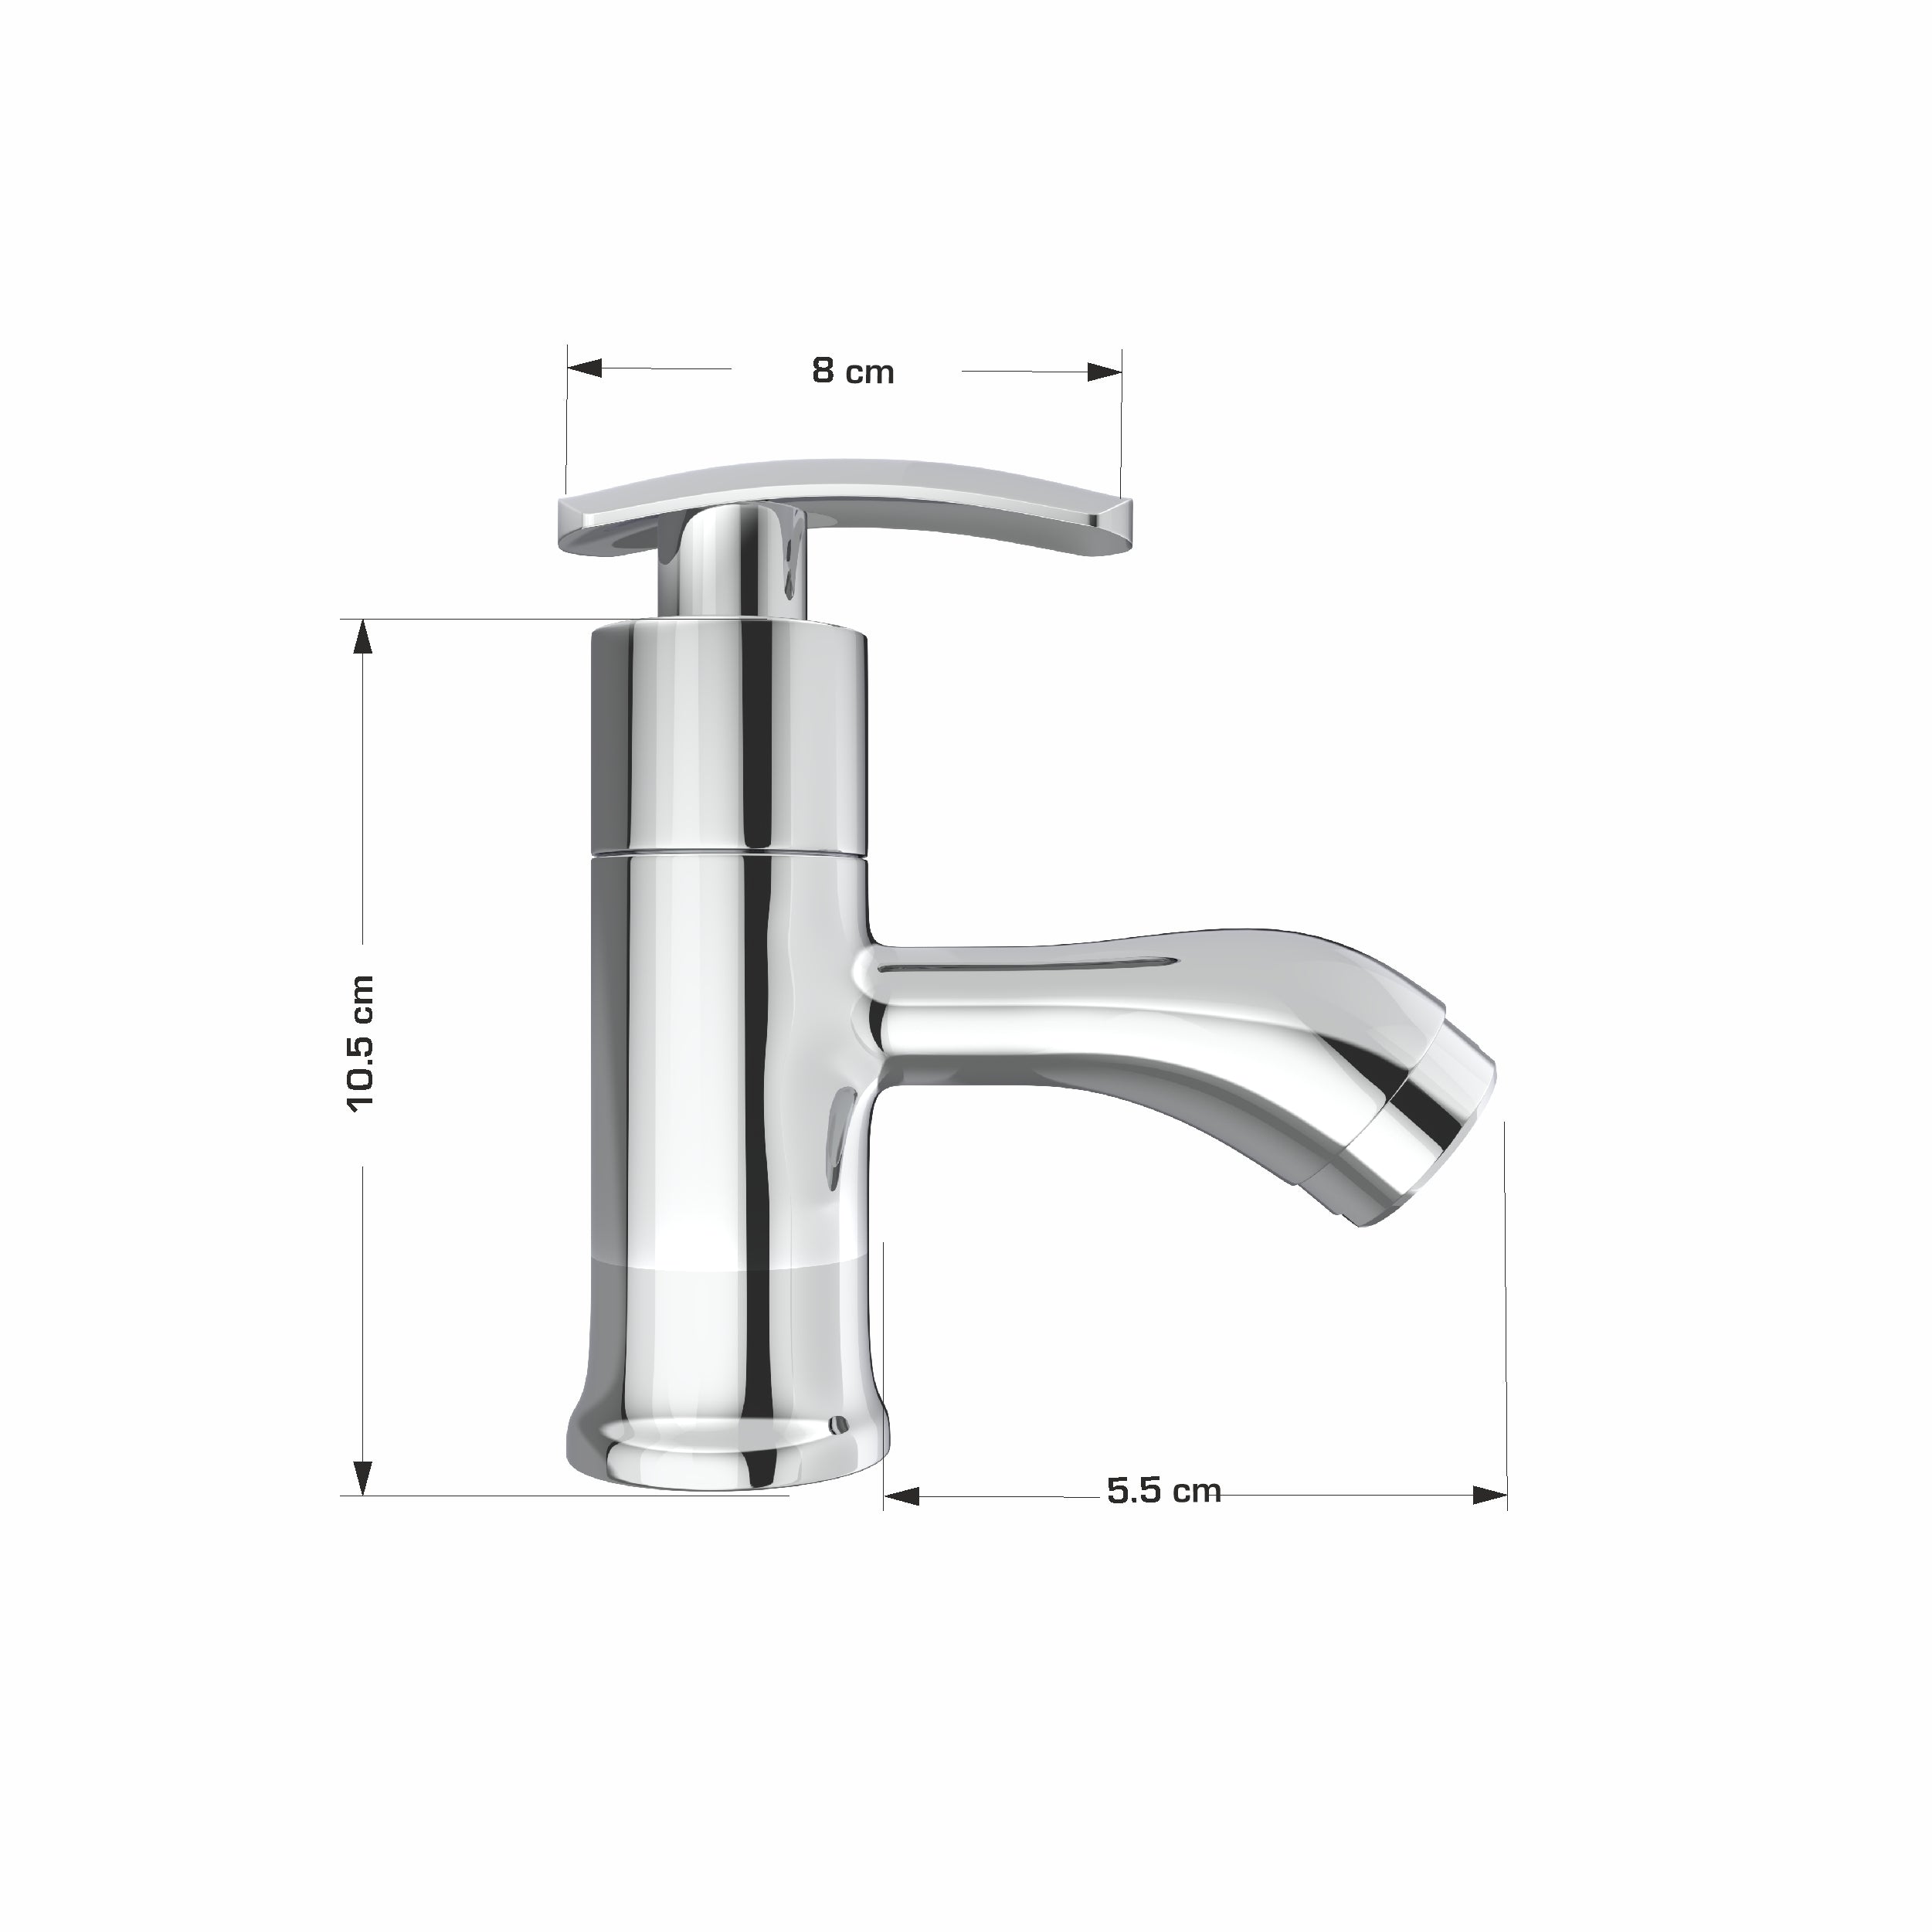 Chrome Finish Short Pillar Faucet tap for Bathroom & Kitchen